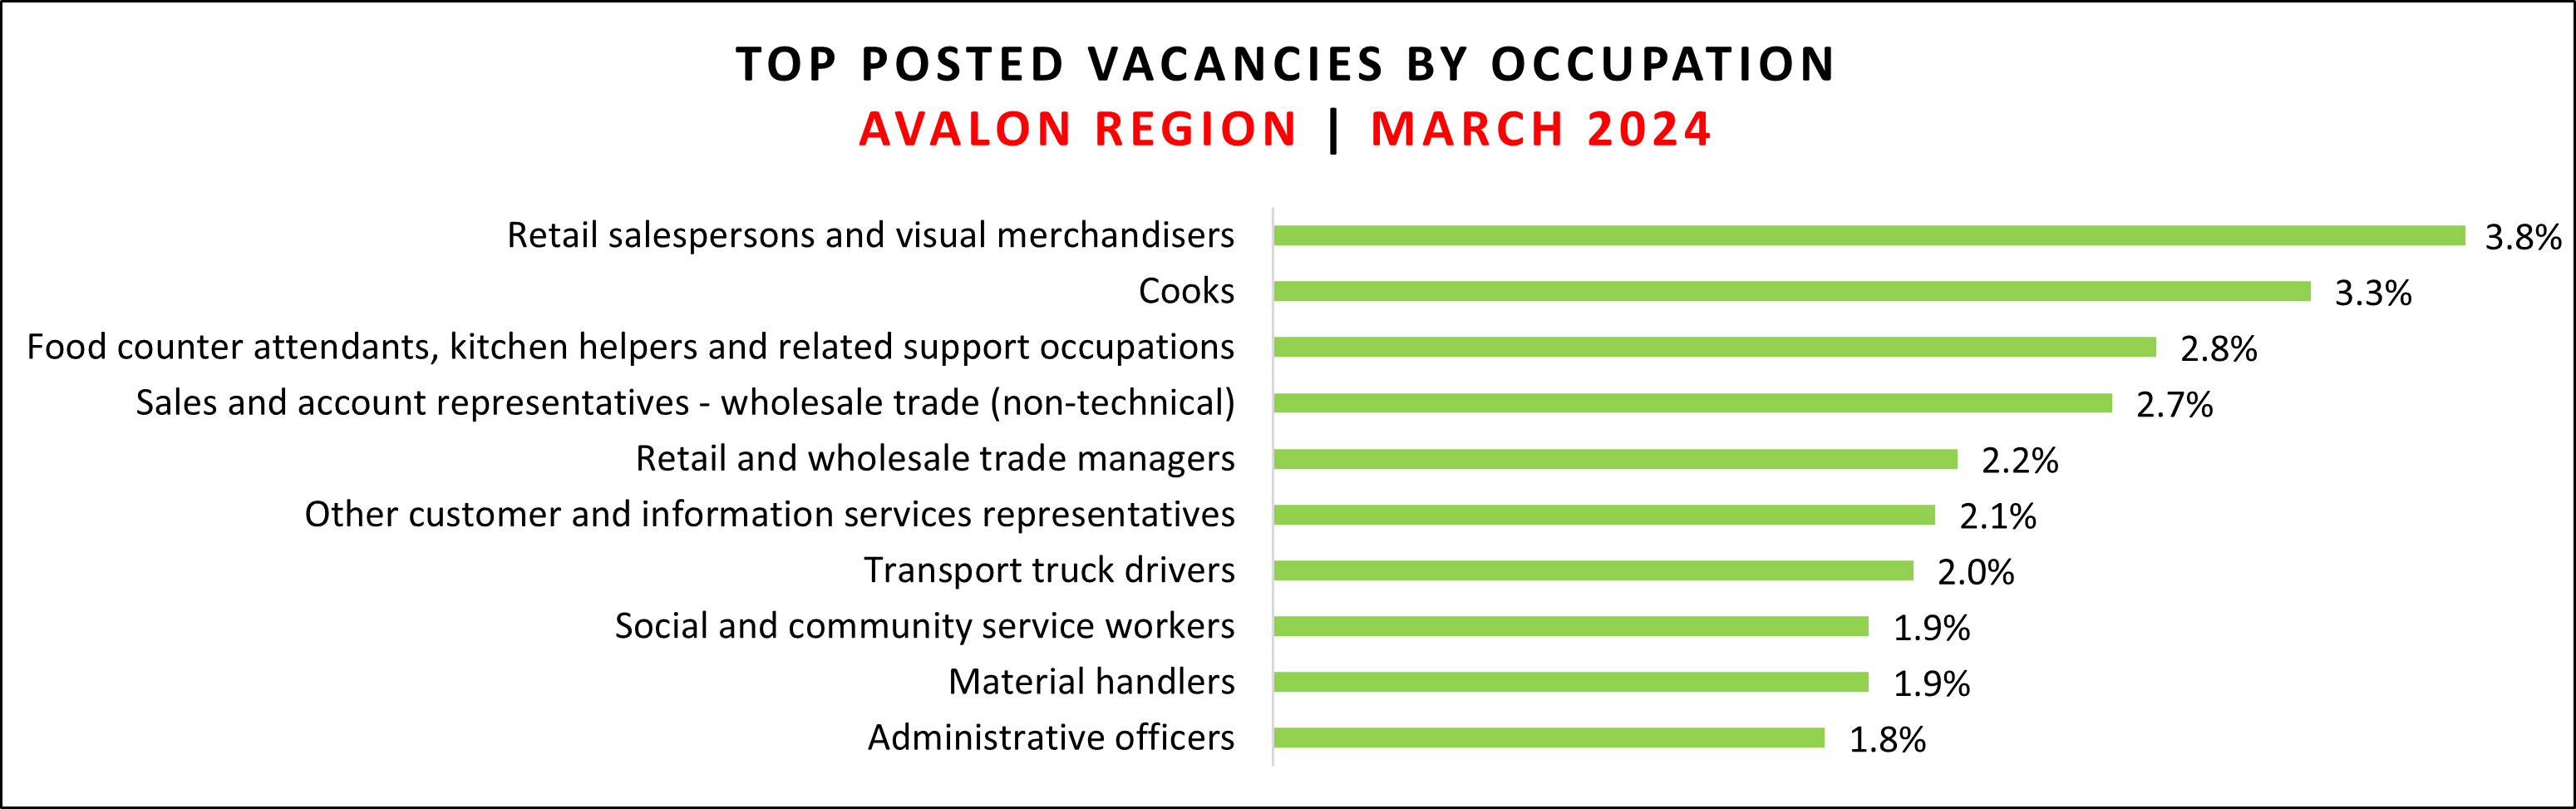 Jab vacancy data for Avalon region in March 2024.